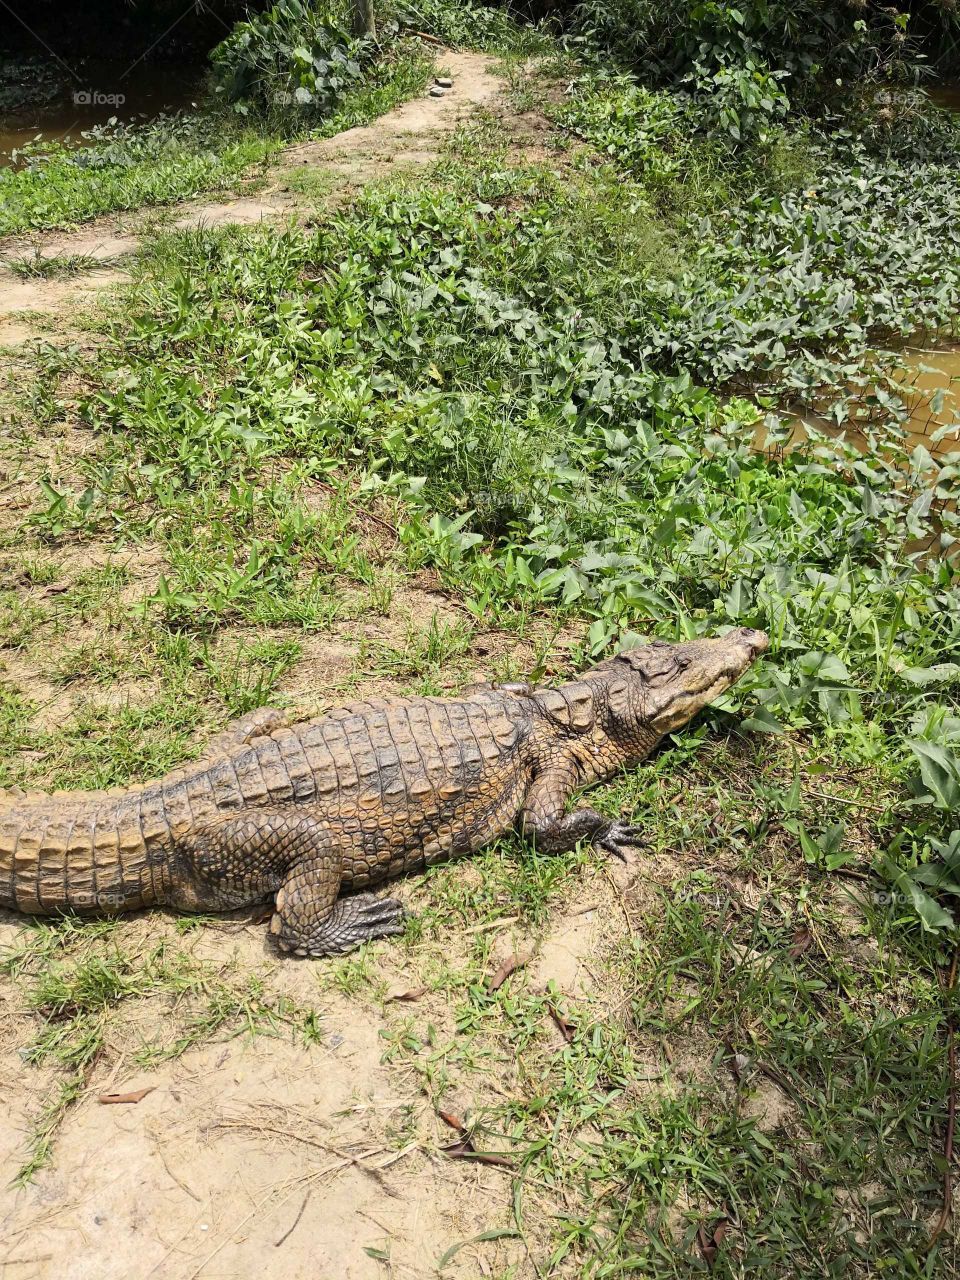 Crocodile in Cape Coast, Ghana